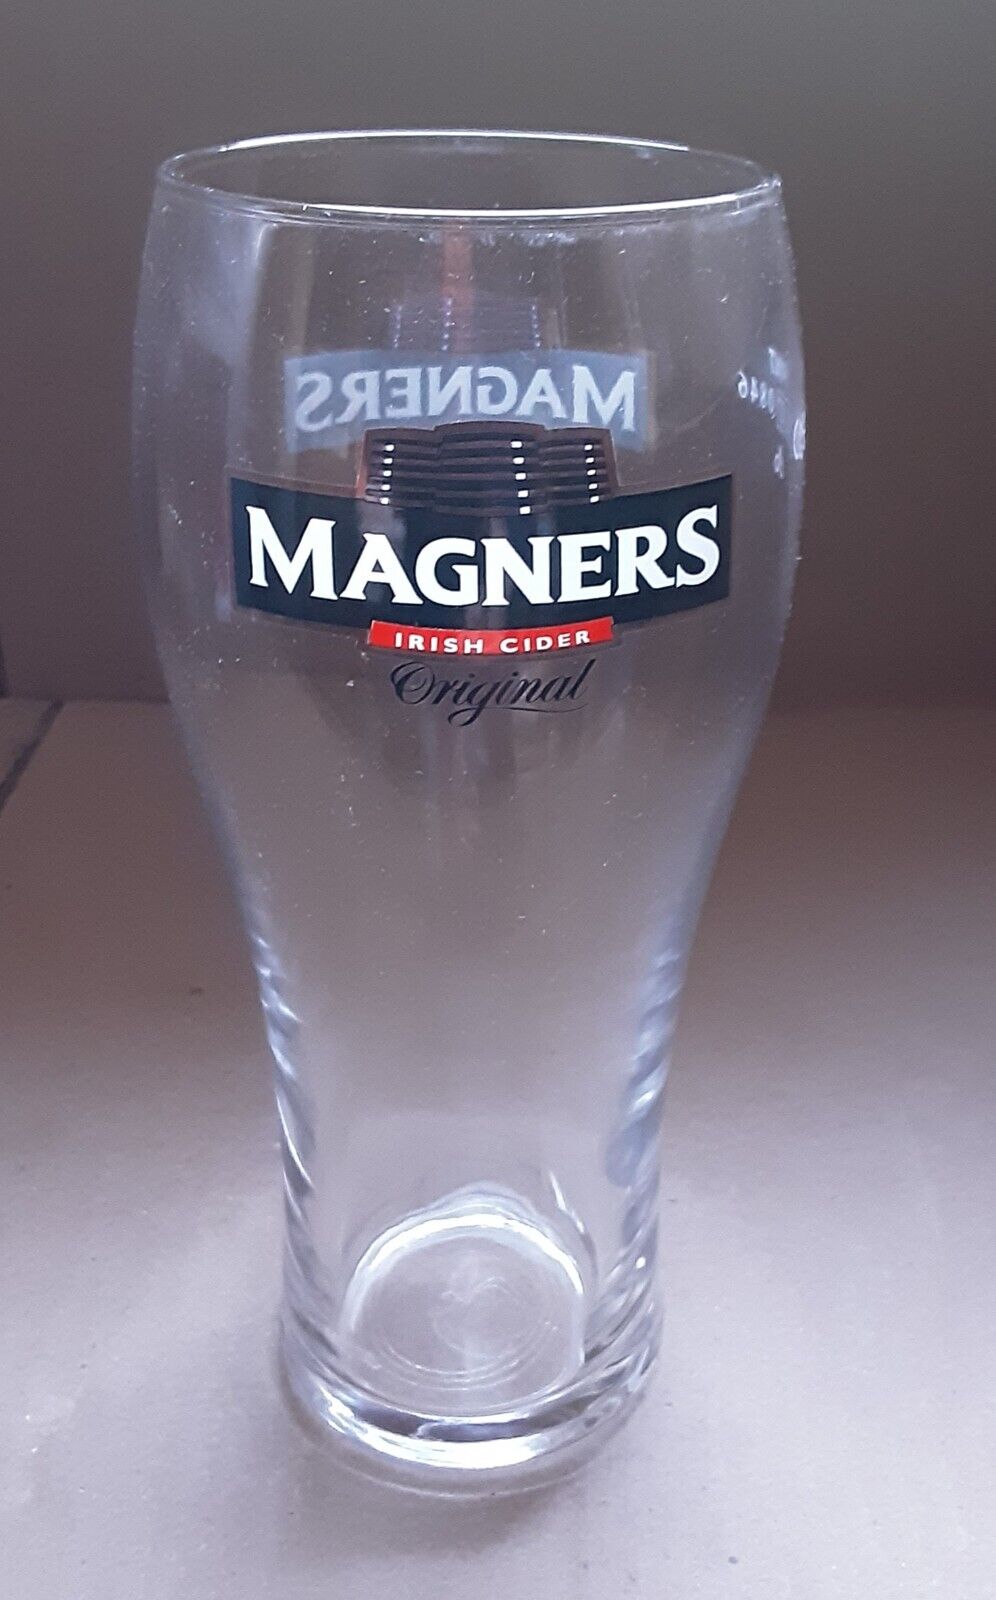 Magners Brewery new Irish Cider Original pint glass homebar mancave display